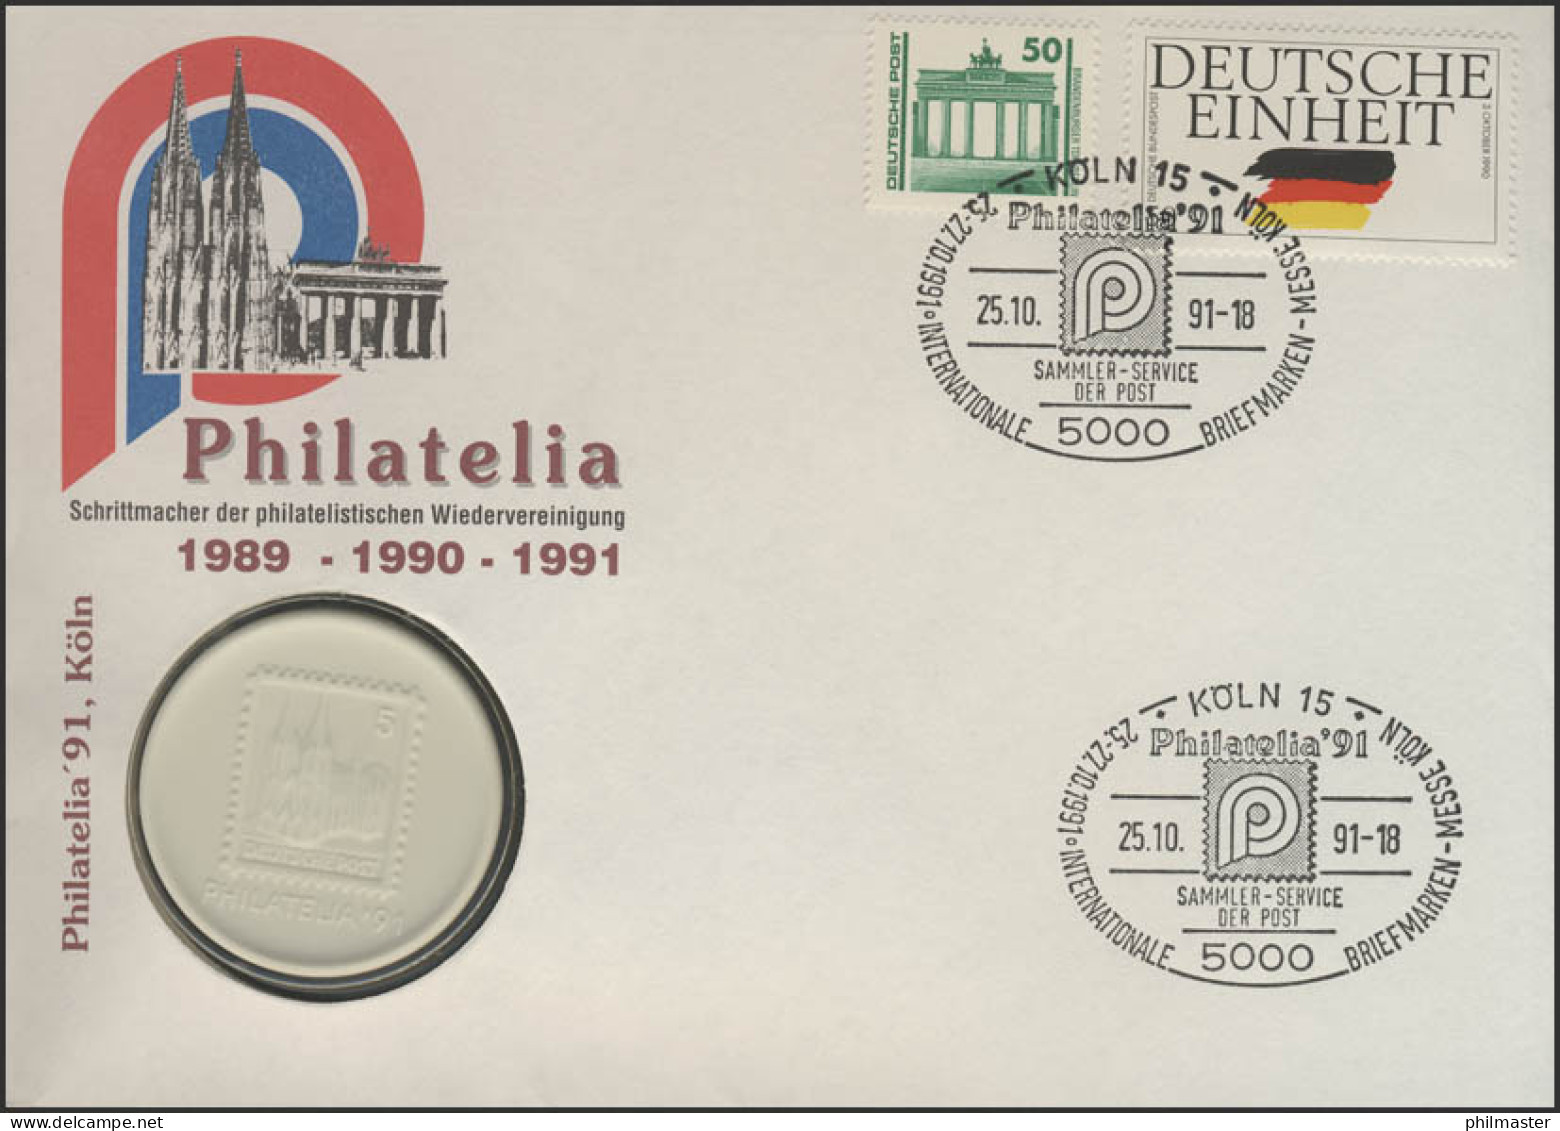 Porzellanbrief Philatelia Köln 25.10.1991 Mit Echtem Meißener Porzellan - Porcellana